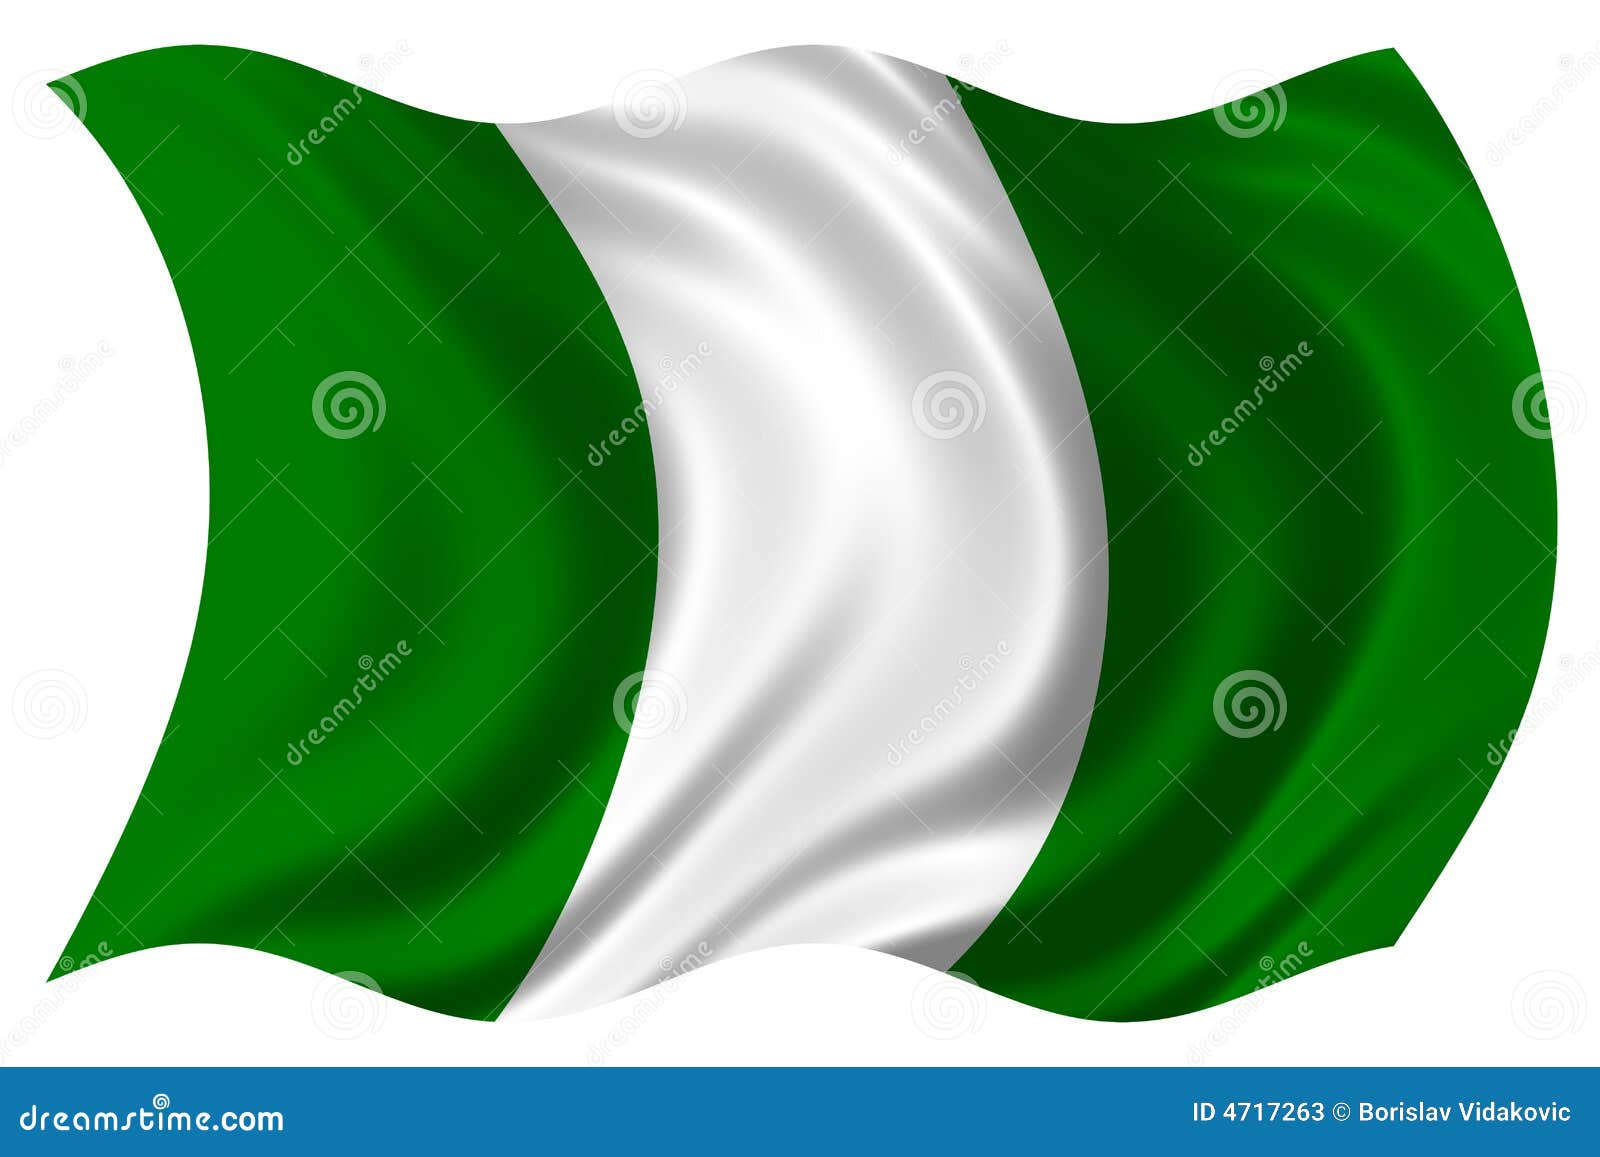 clipart nigeria flag - photo #49